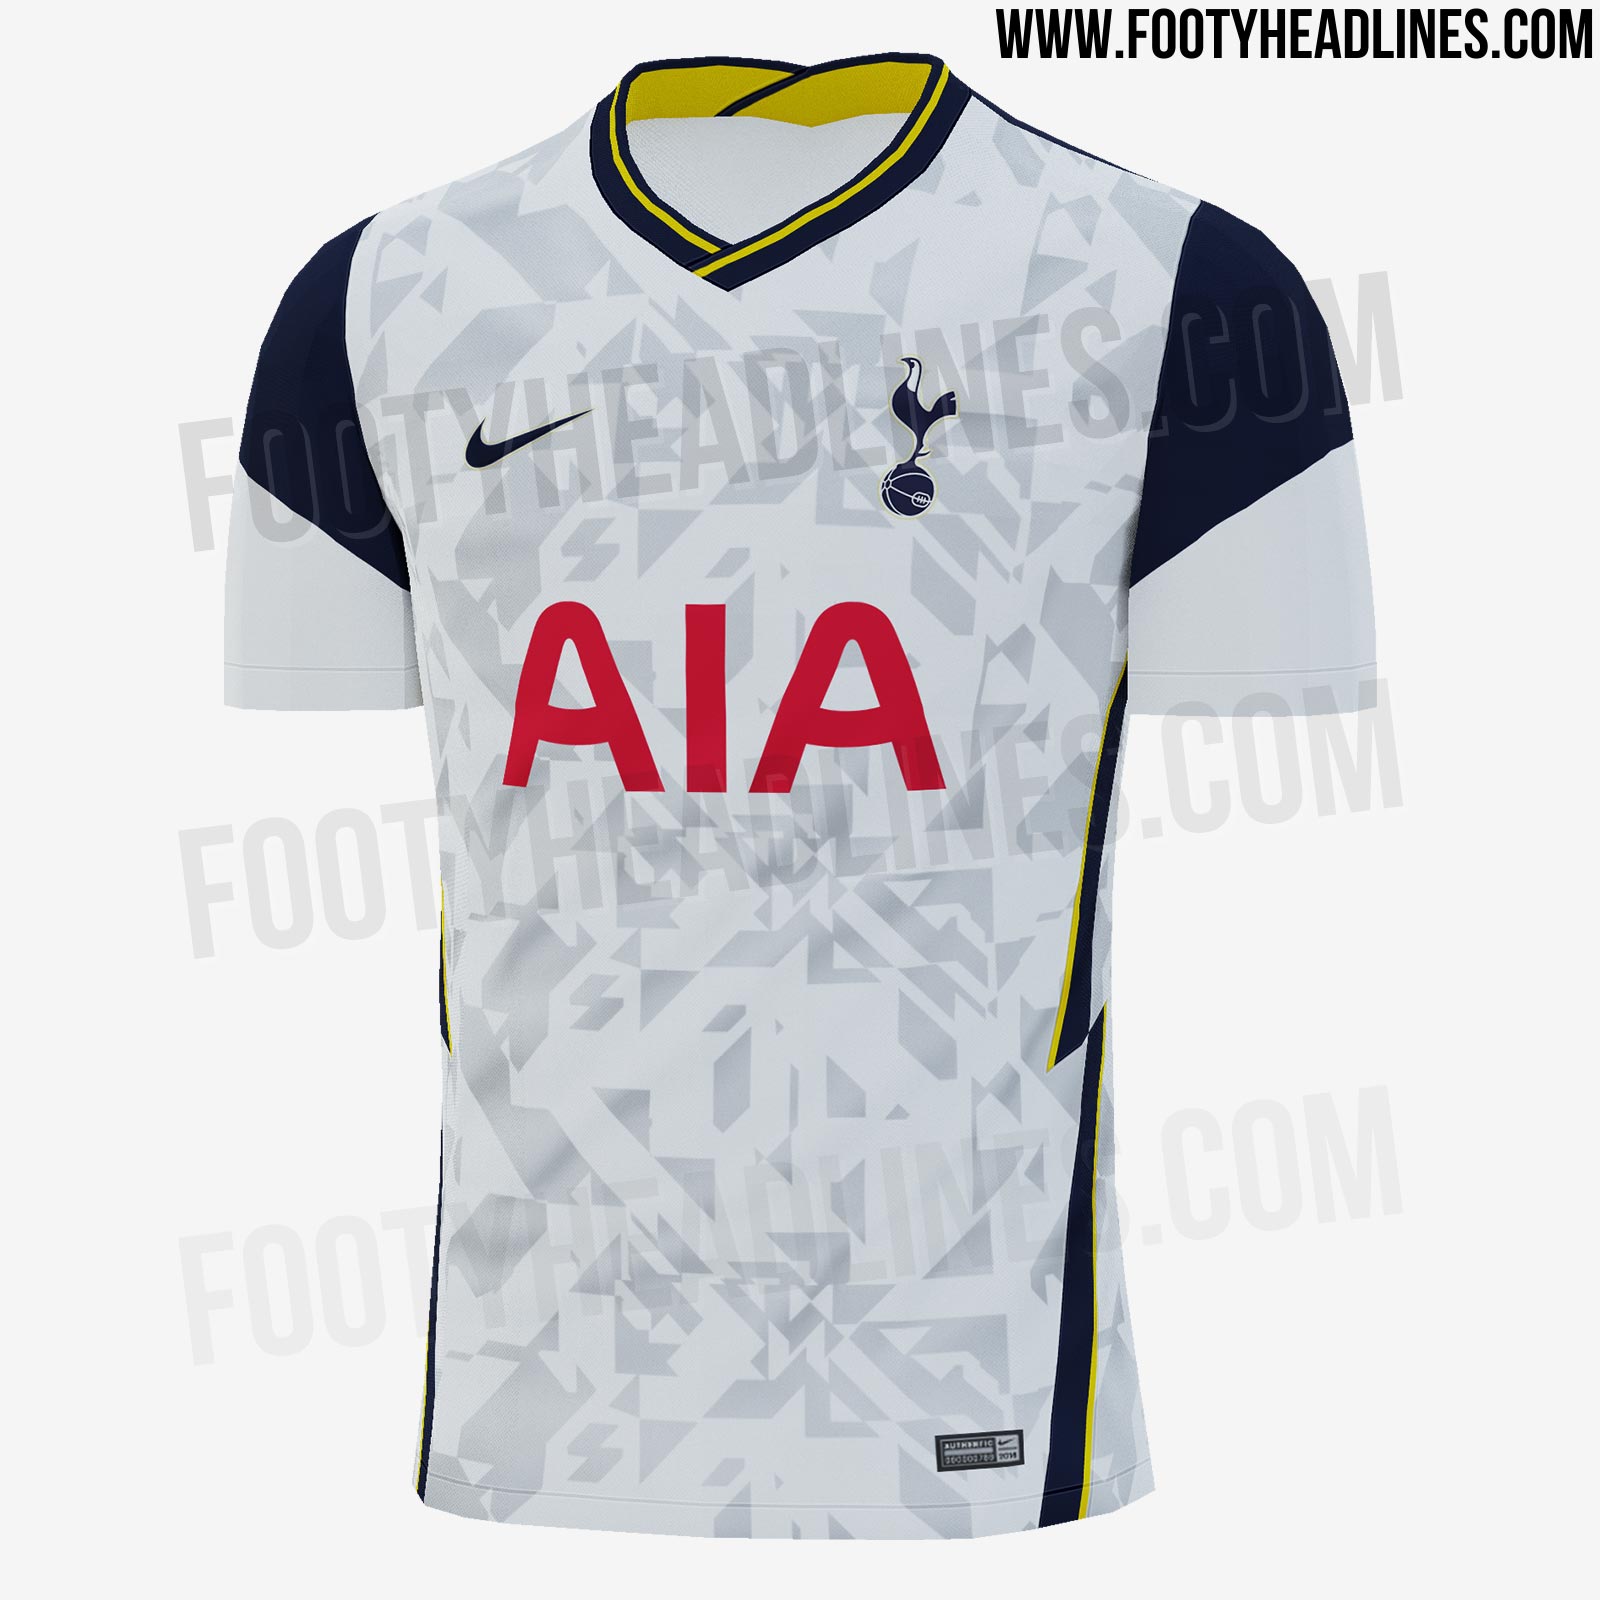 Nike Tottenham Hotspur 17-18 Home Kit Released - Footy Headlines